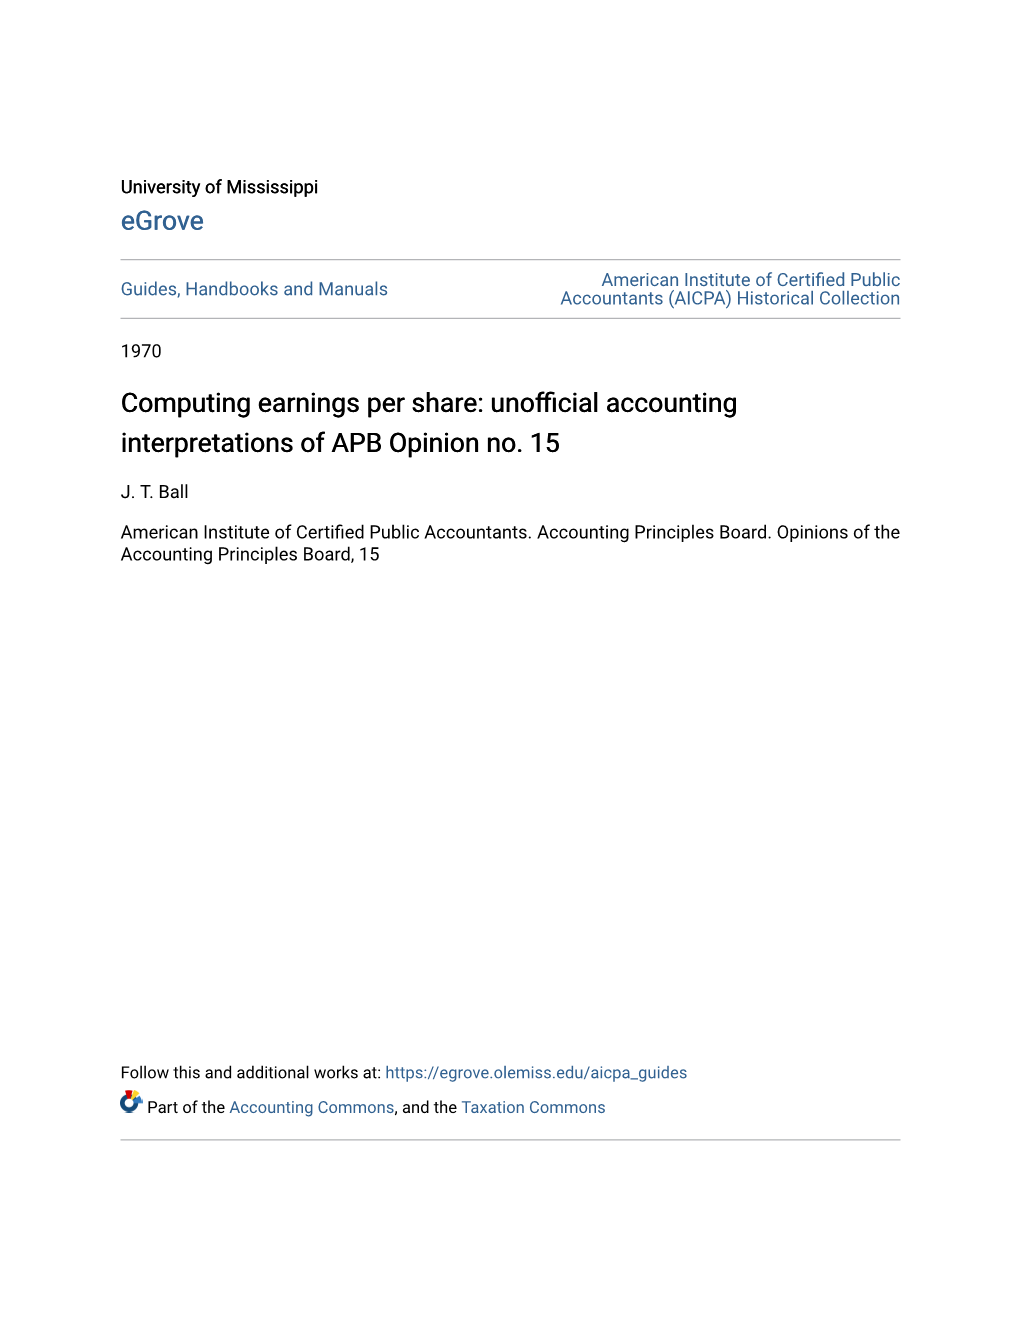 Computing Earnings Per Share: Unofficial Accounting Interpretations of APB Opinion No